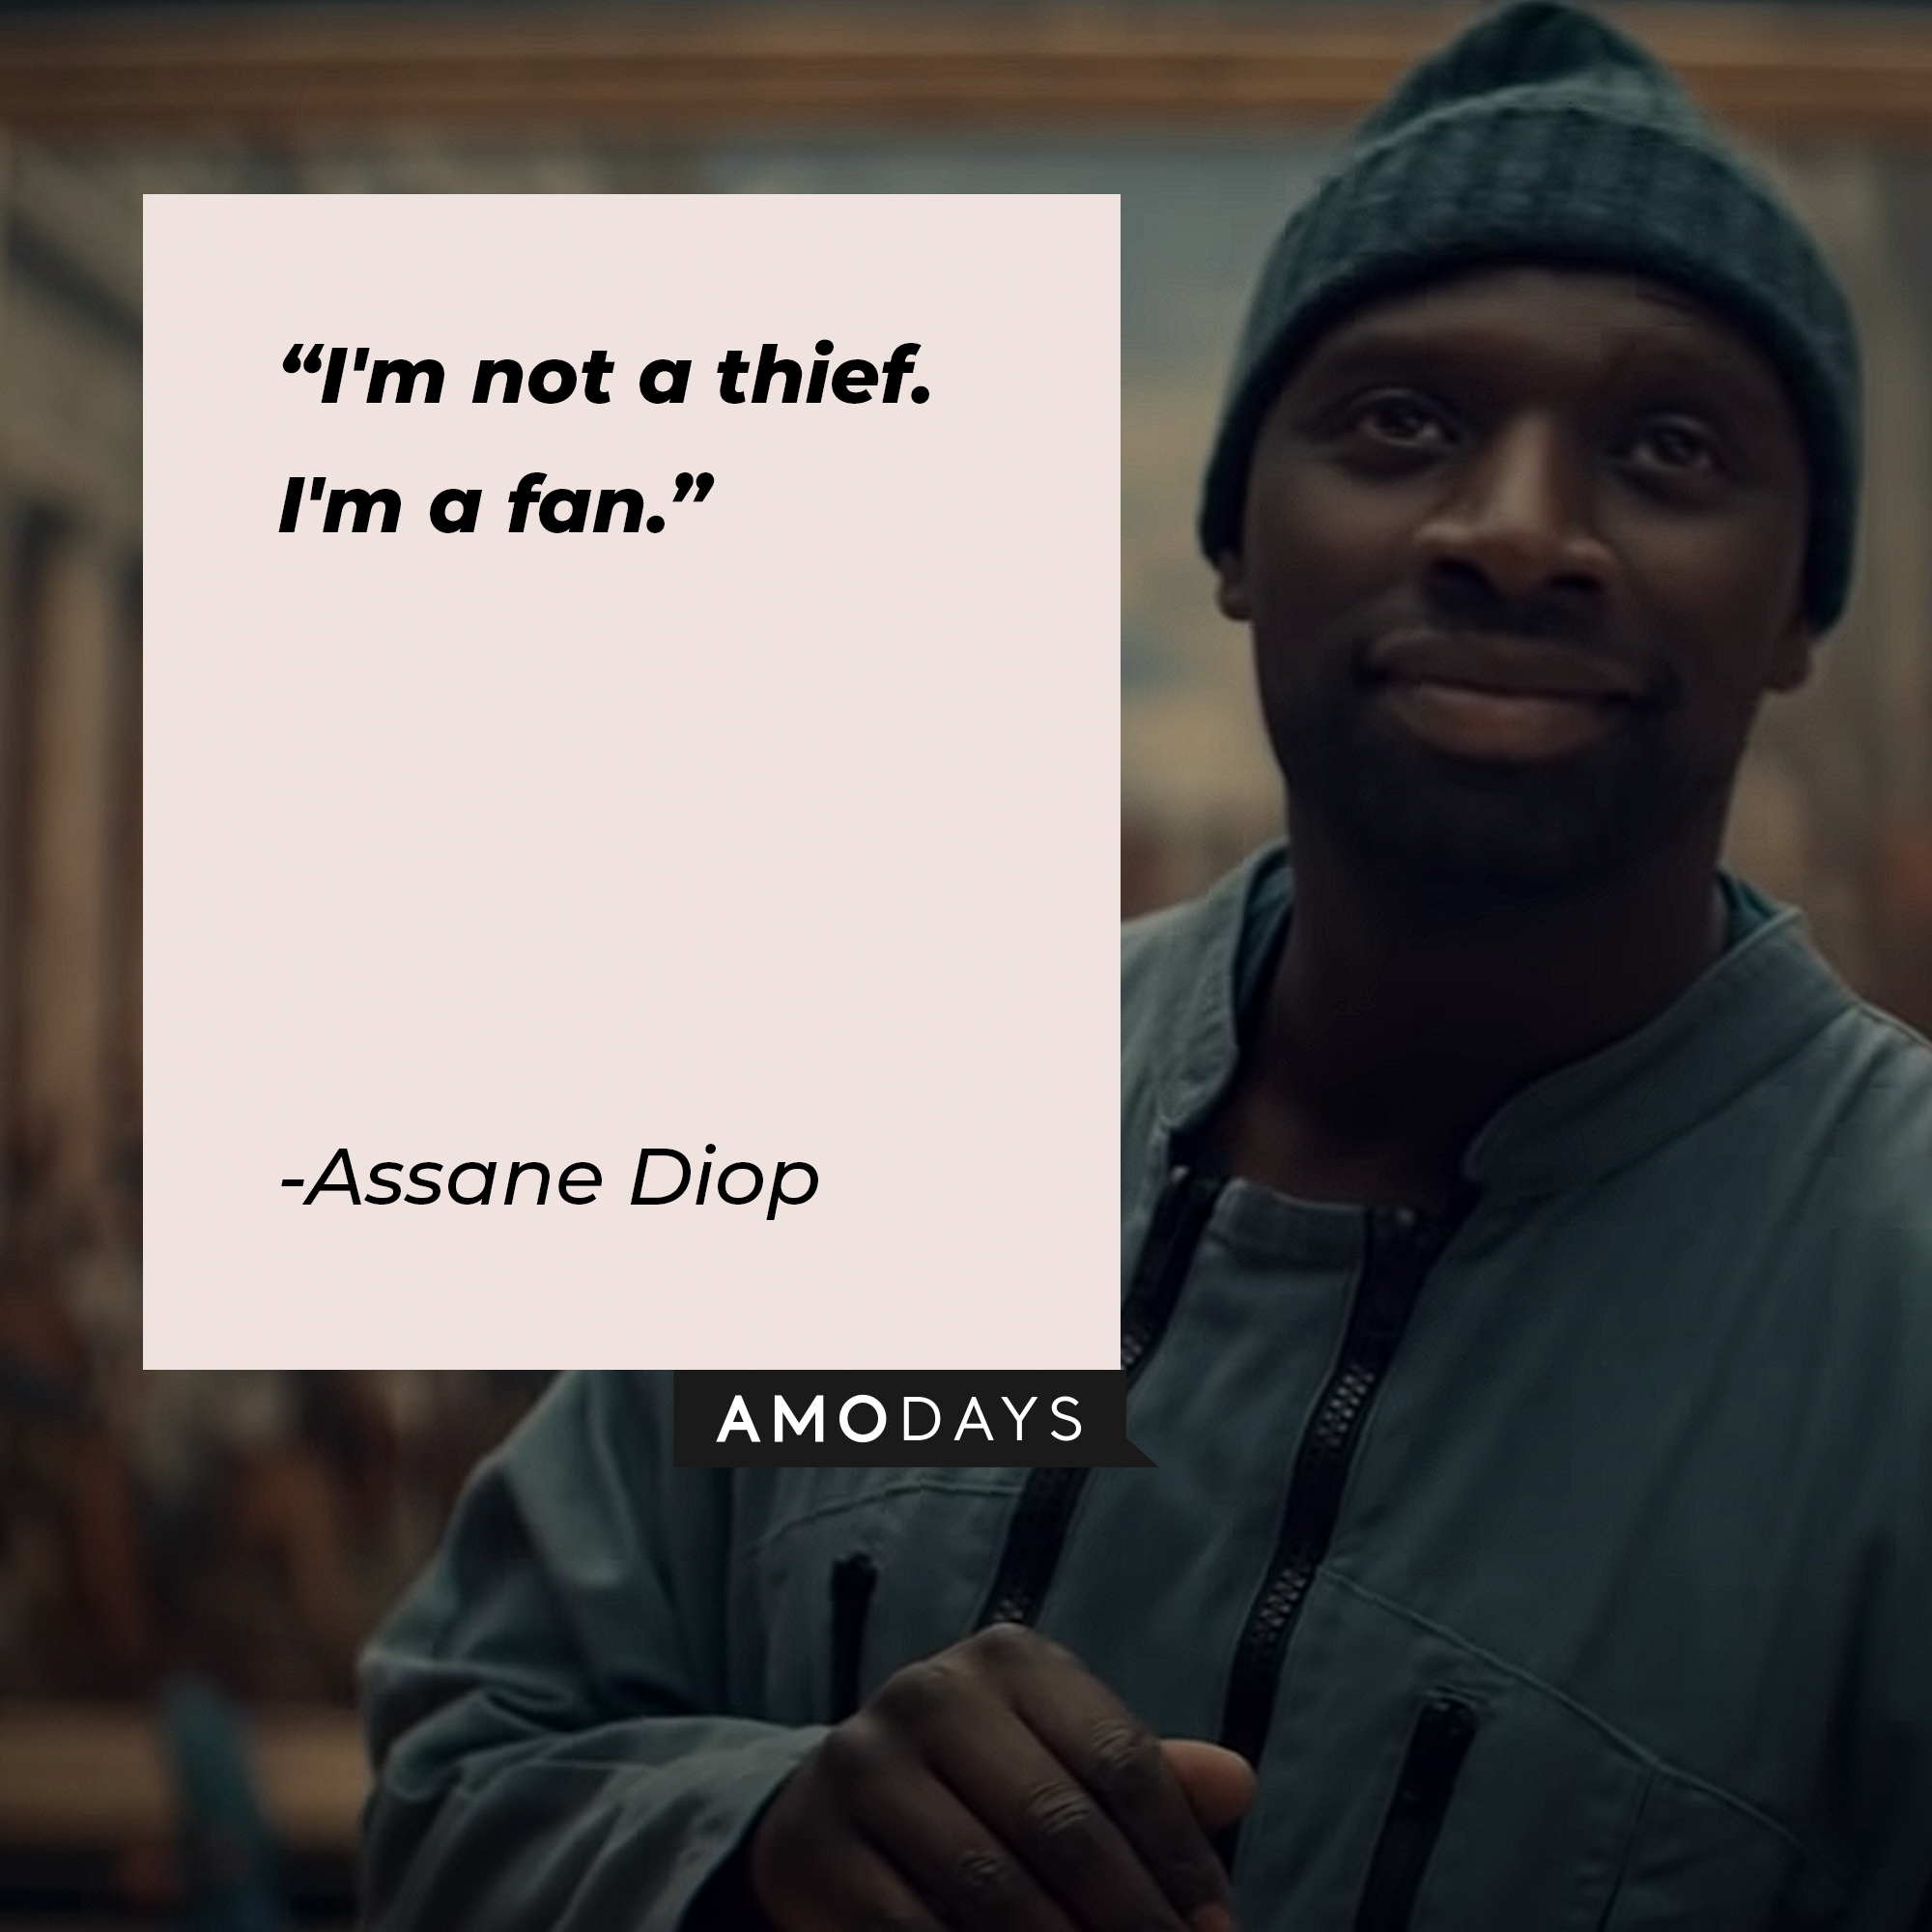 Assane Diop's quote: "I'm not a thief. I'm a fan." | Image: Amodays